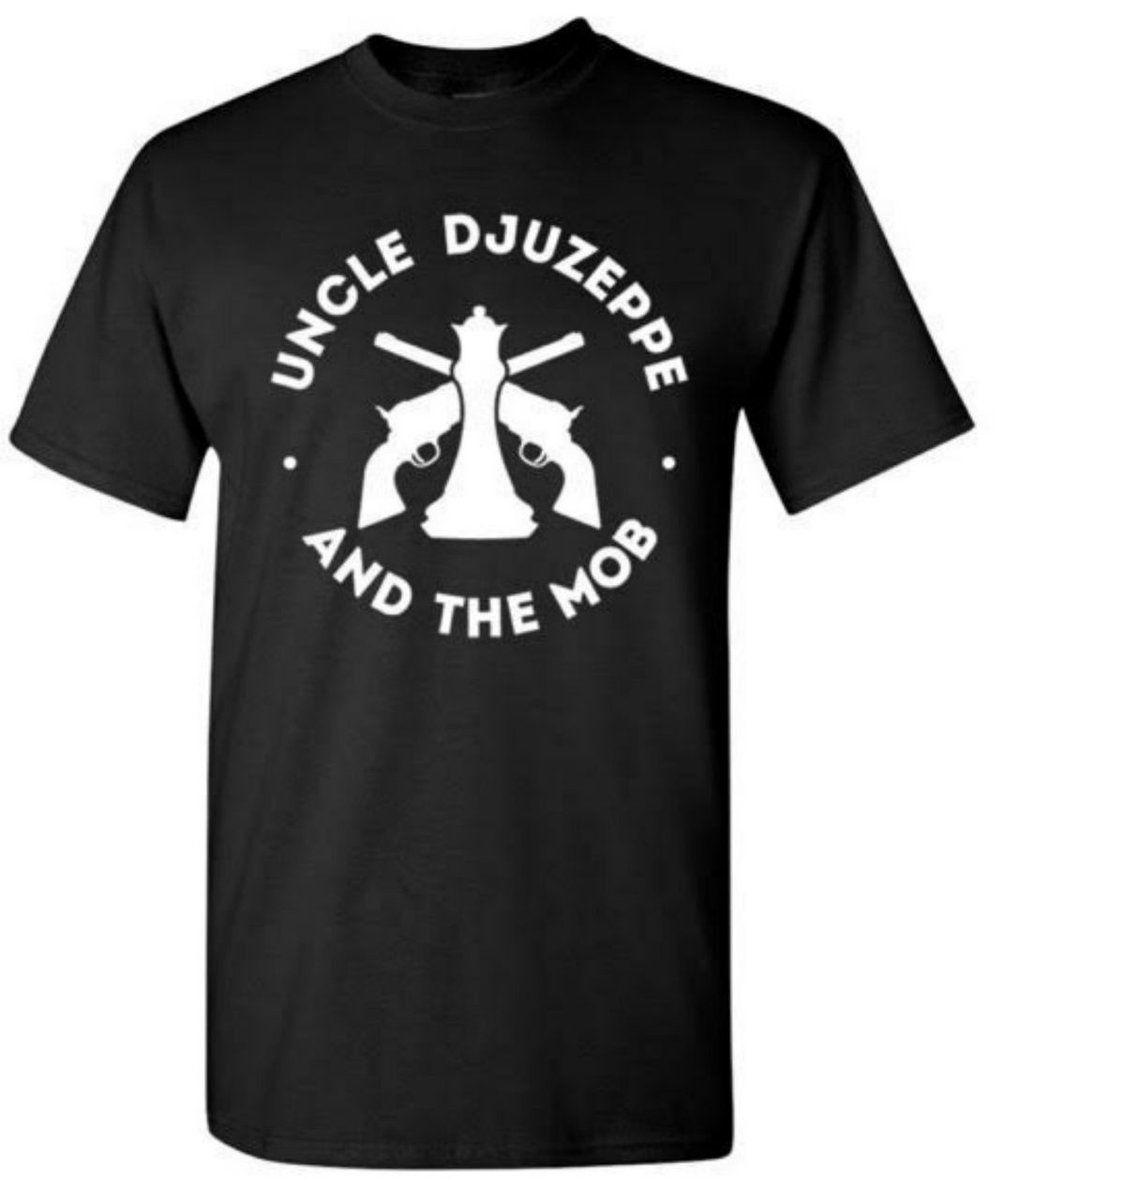 Black'n Logo - Black n White Logo T-shirt | uncle djuzeppe & the mob